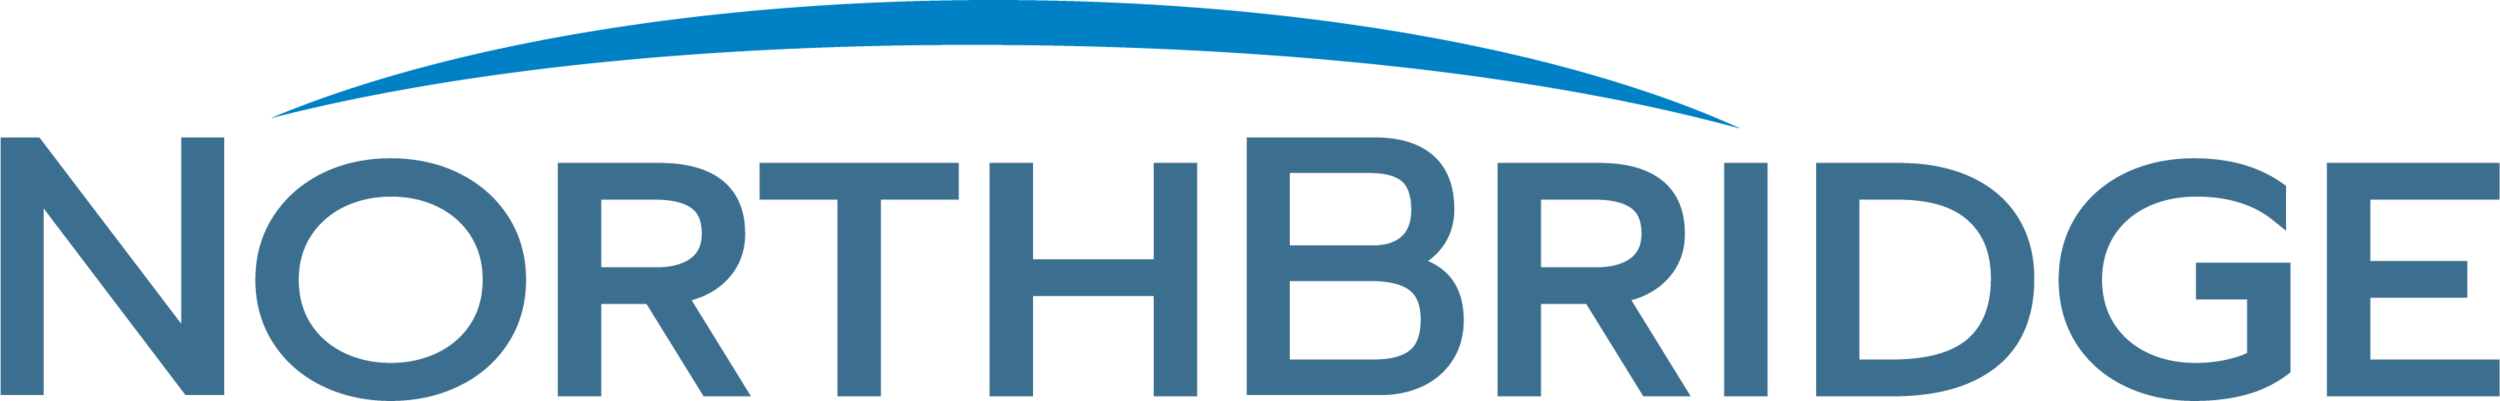 NB Corporate Logo.png